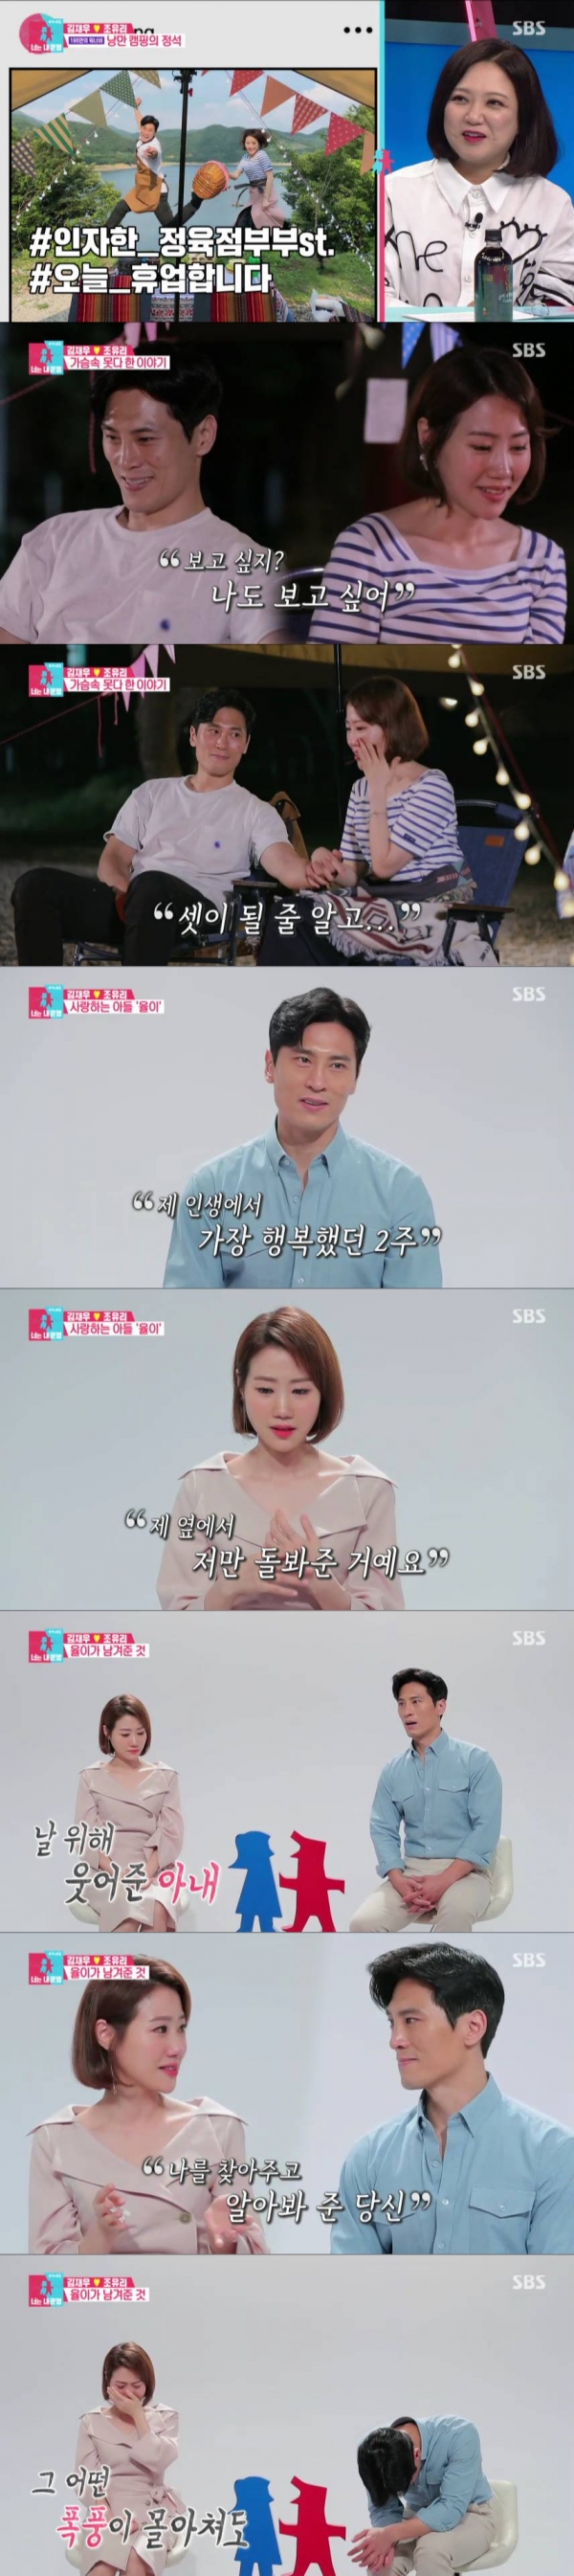 SBS ‘동상이몽2-너는 내 운명’ 방송 화면.